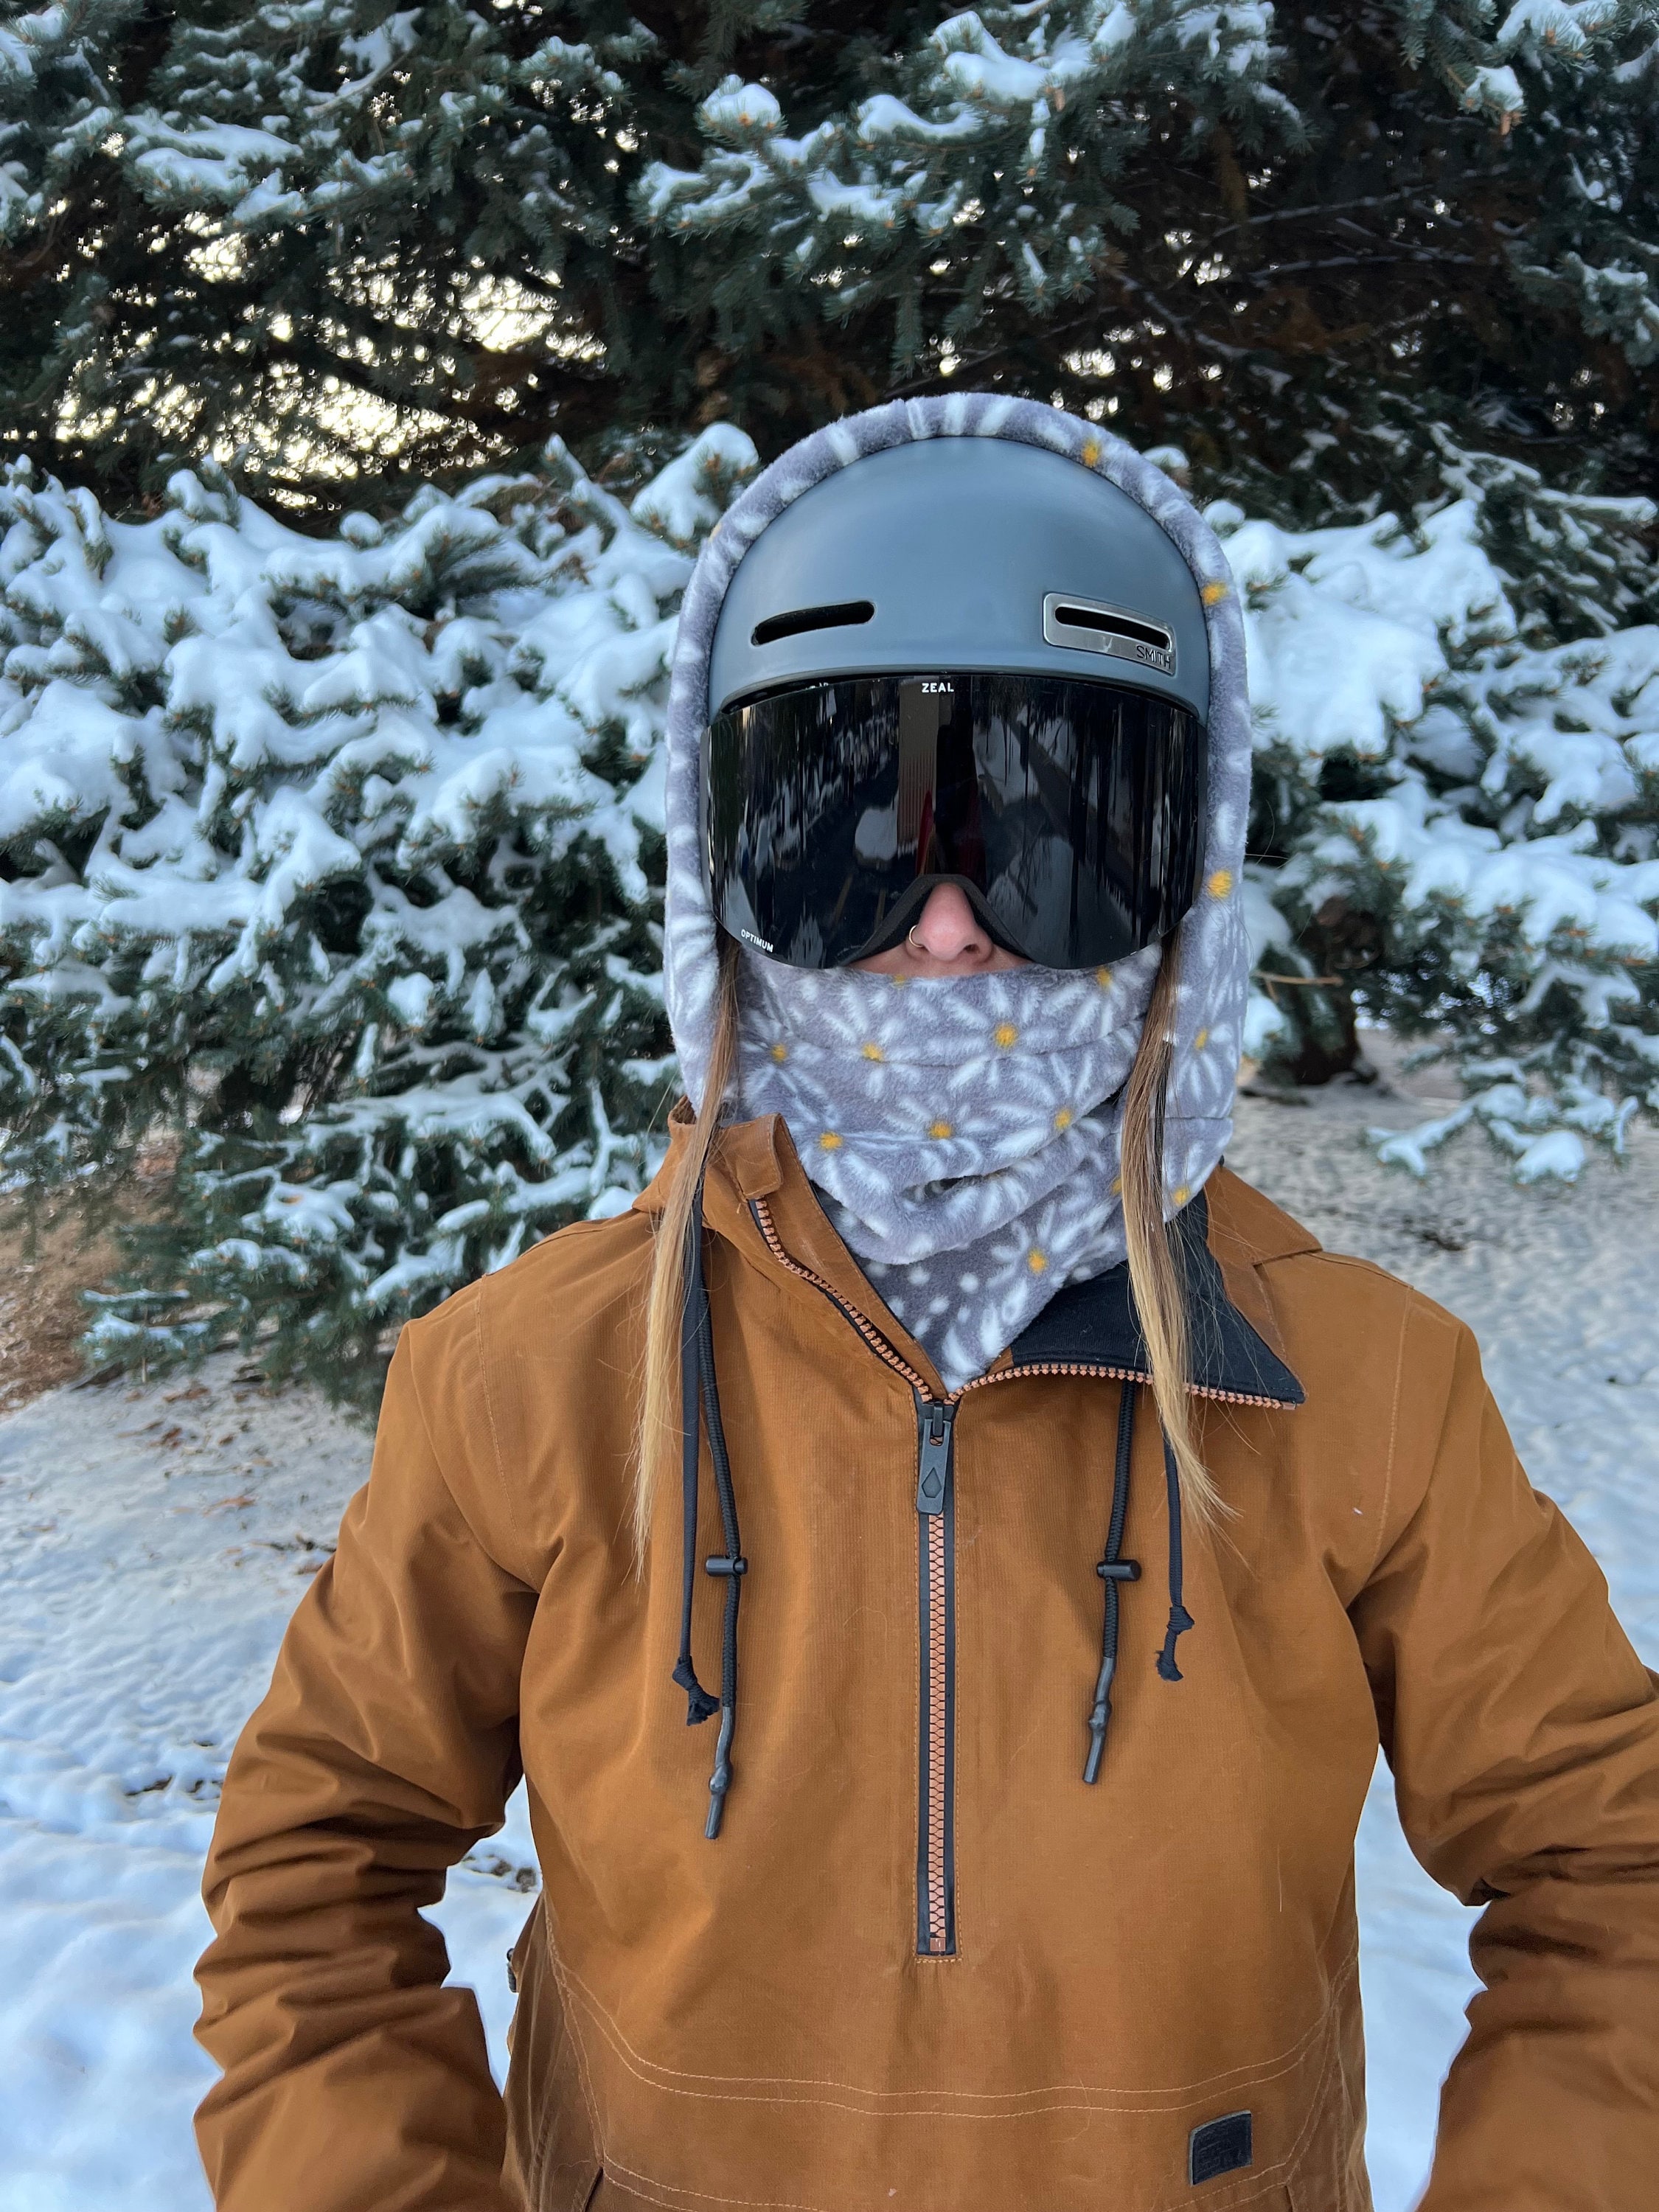 TUTO] Customisation Casque Ski/Snow avec autocollants 